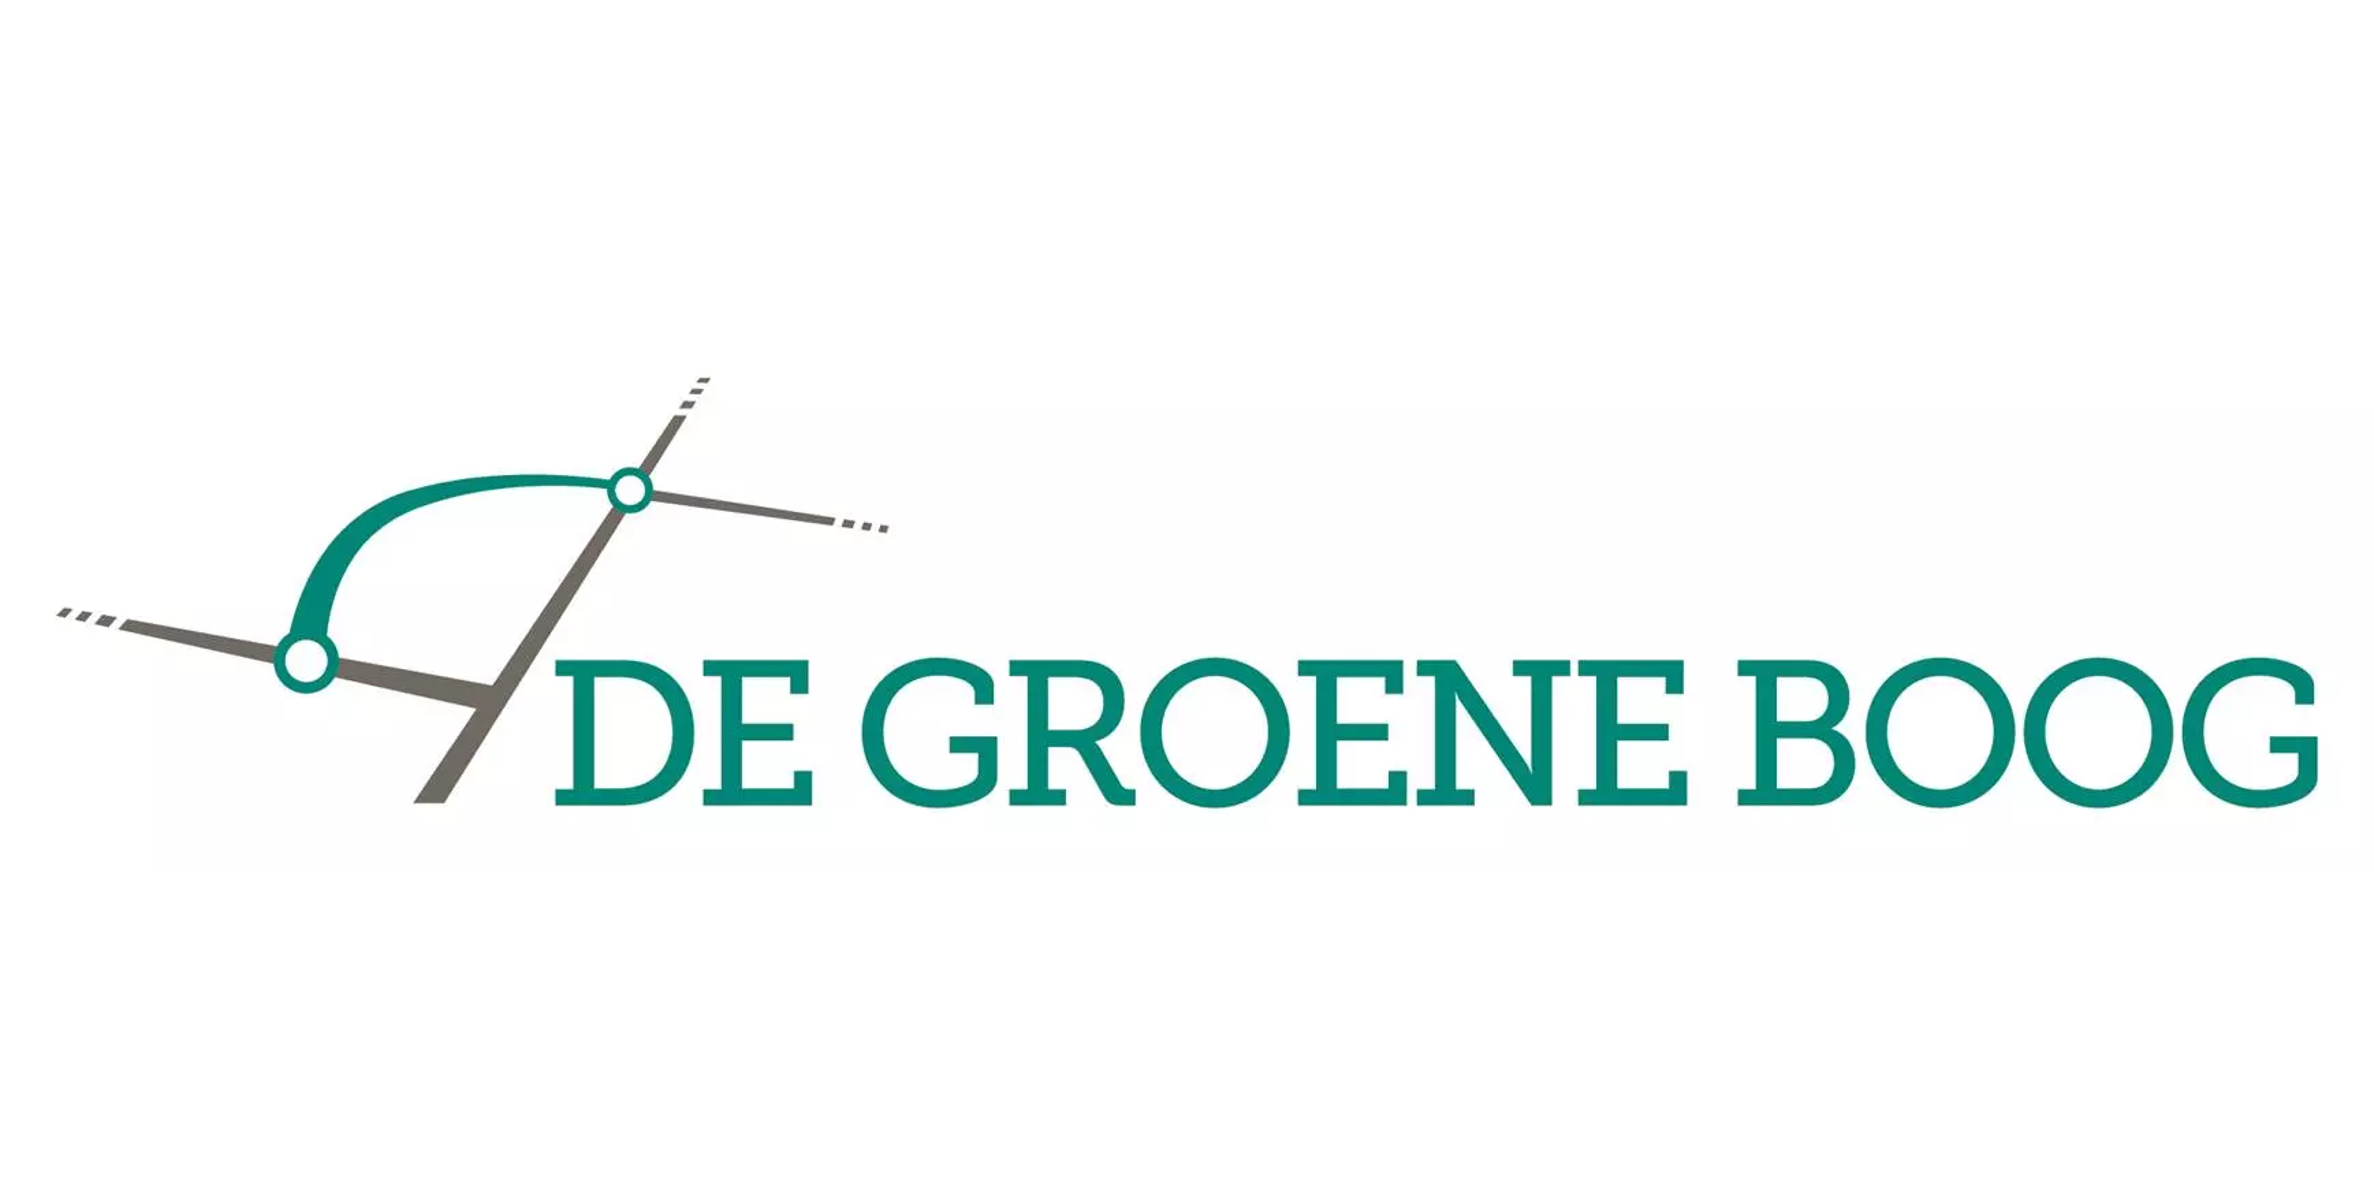 De Groene Boog logo